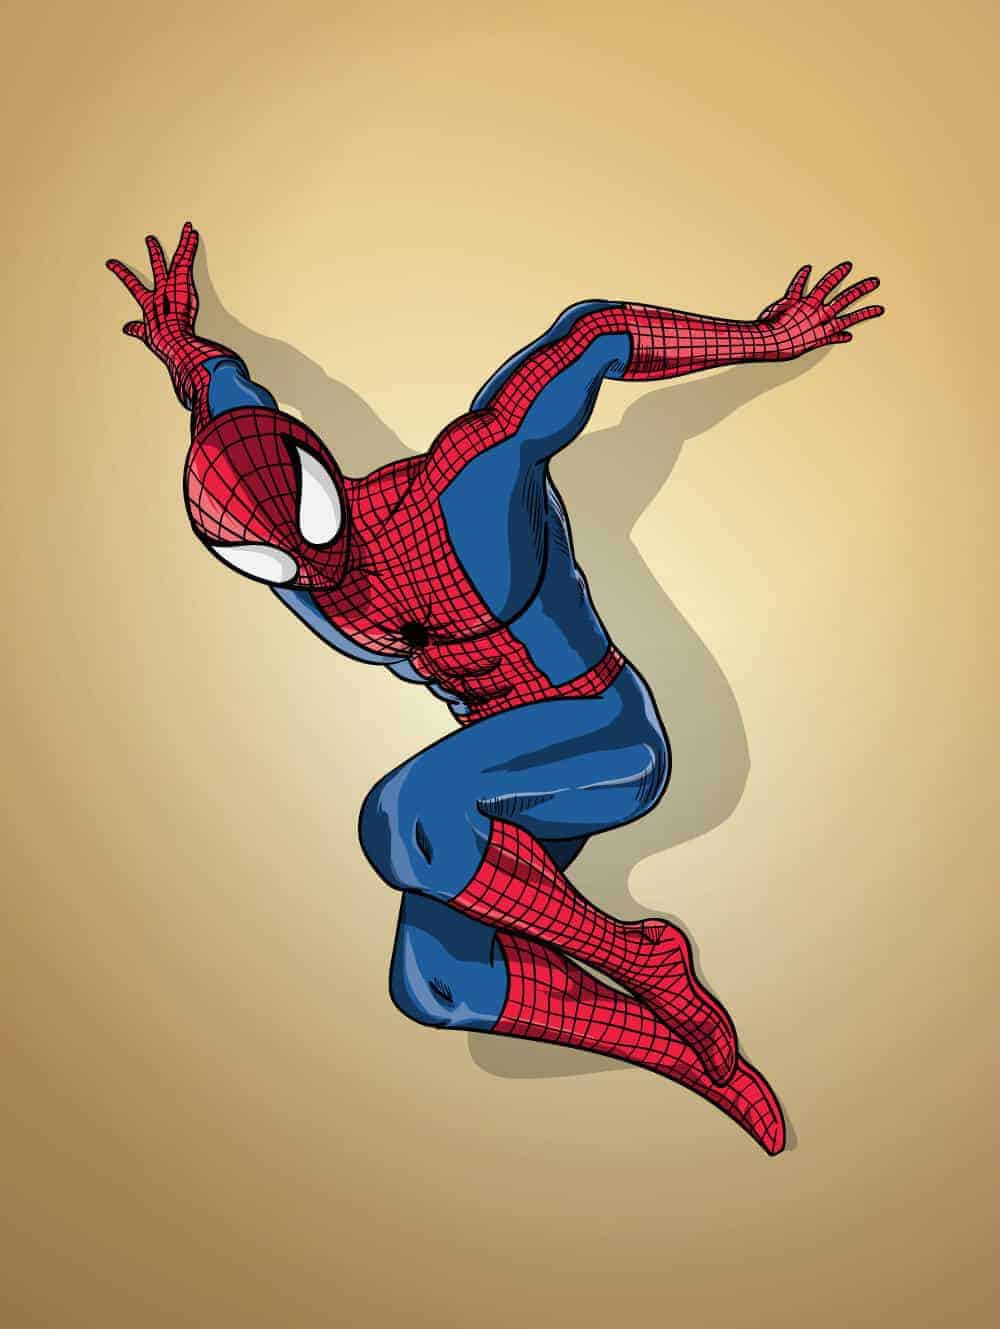 Spiderman-Cartoon-Illustration